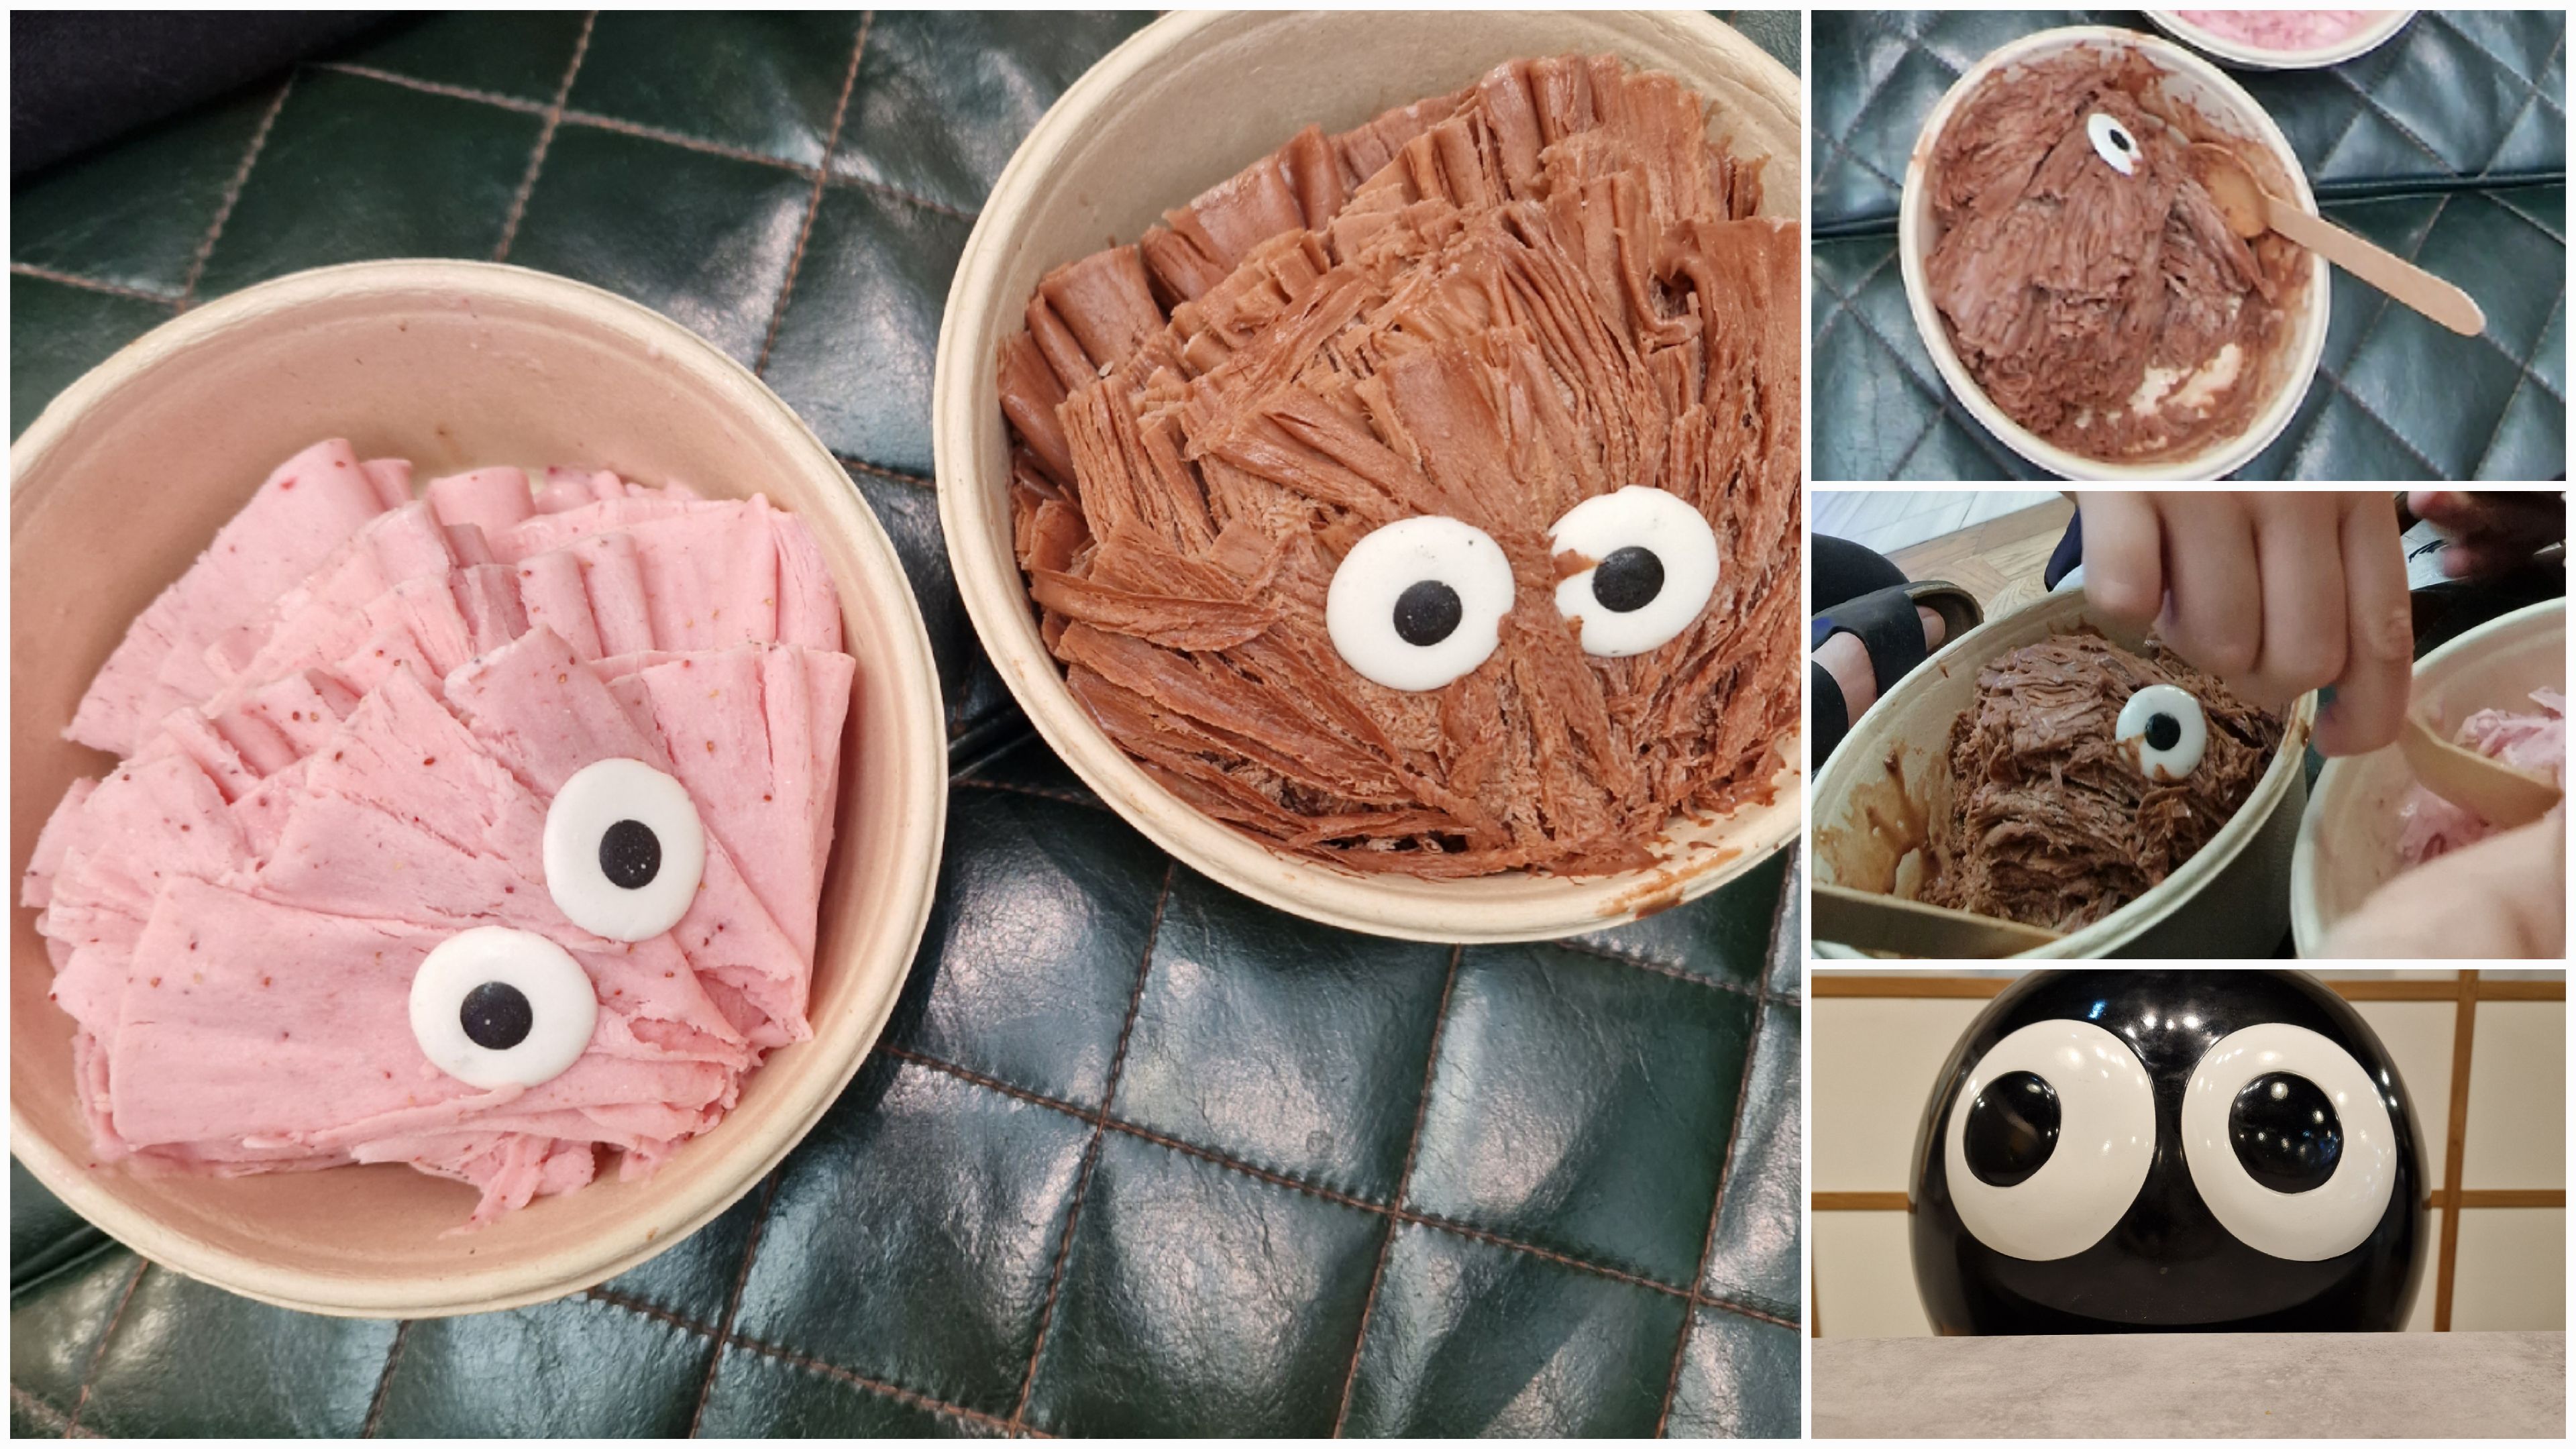 BiT Roji Monster Ice Cream sittdel